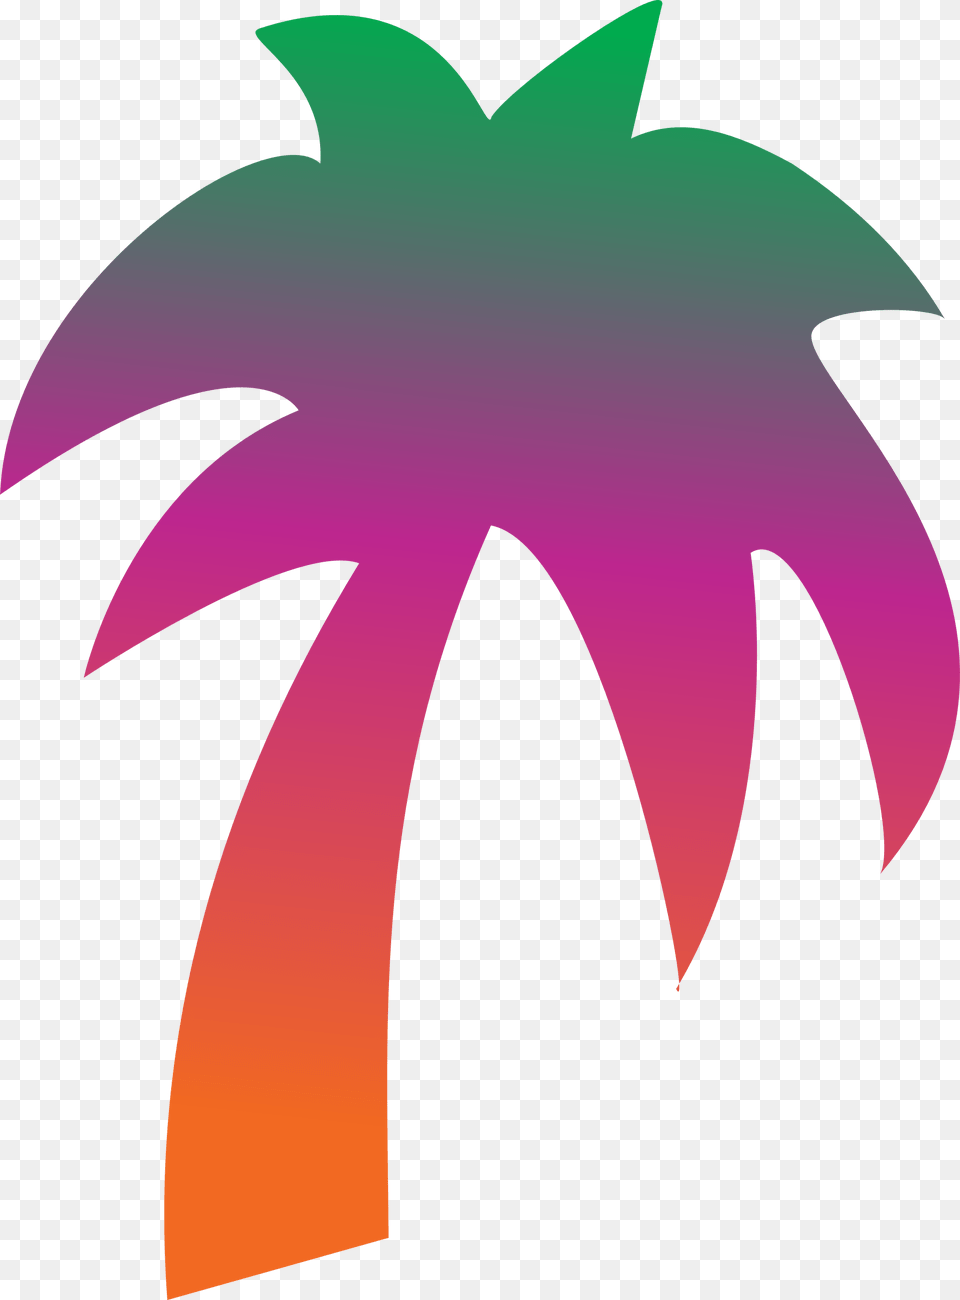 Pinkplantstar Palm Tree Clip Art, Logo, Leaf, Plant, Animal Png